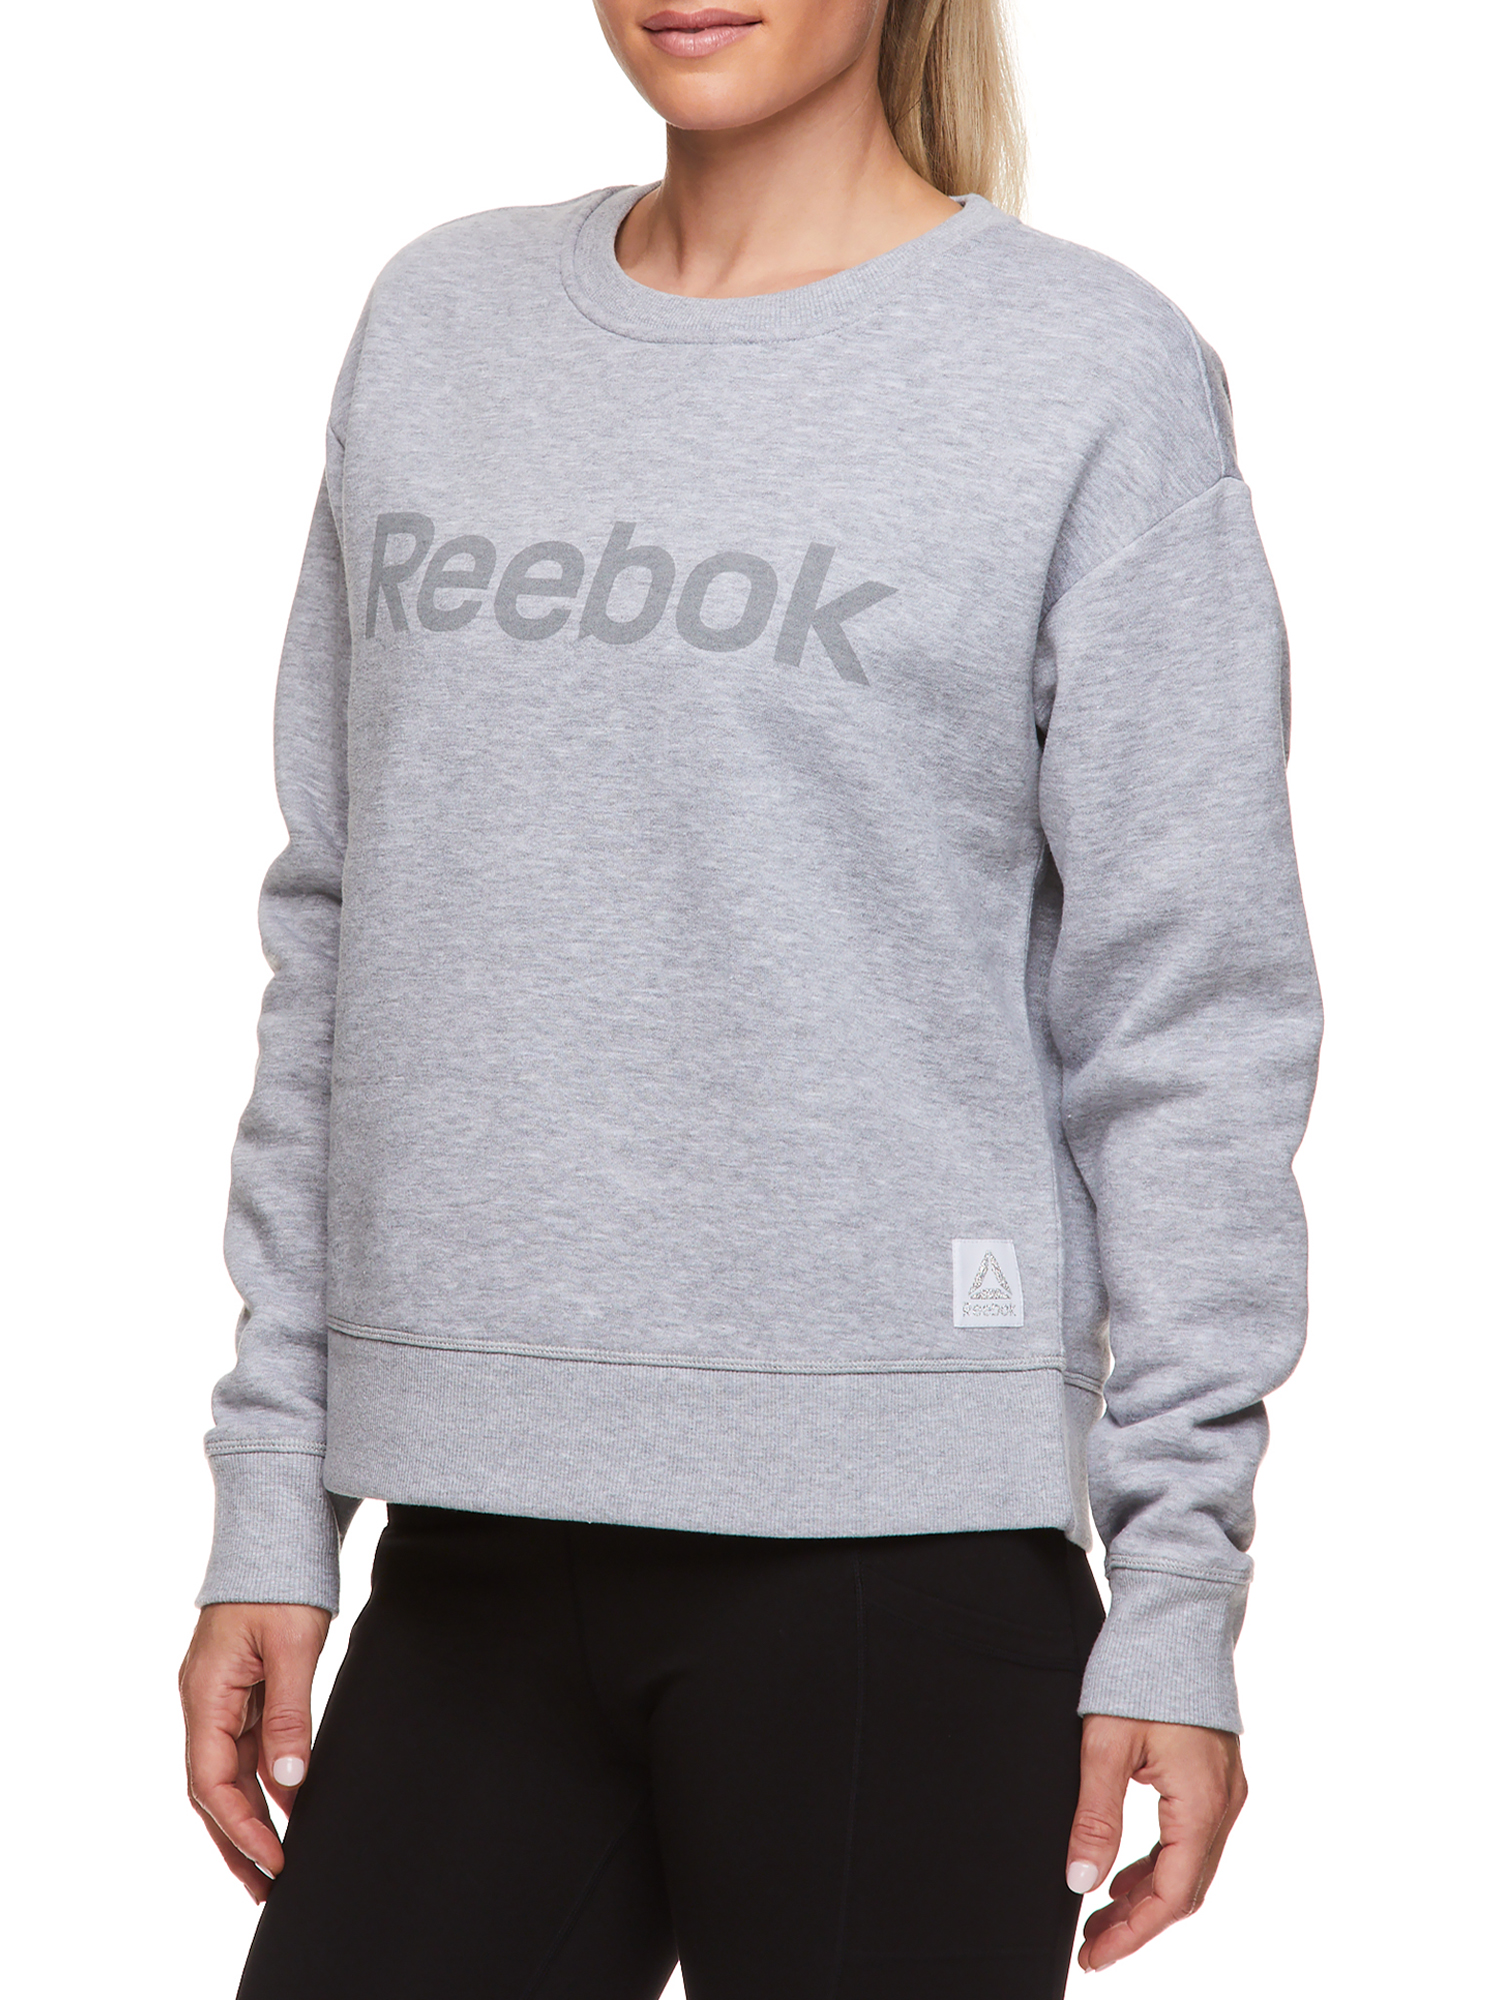 Reebok Womens Cozy Crewneck Sweatshirt with Graphic - image 4 of 4